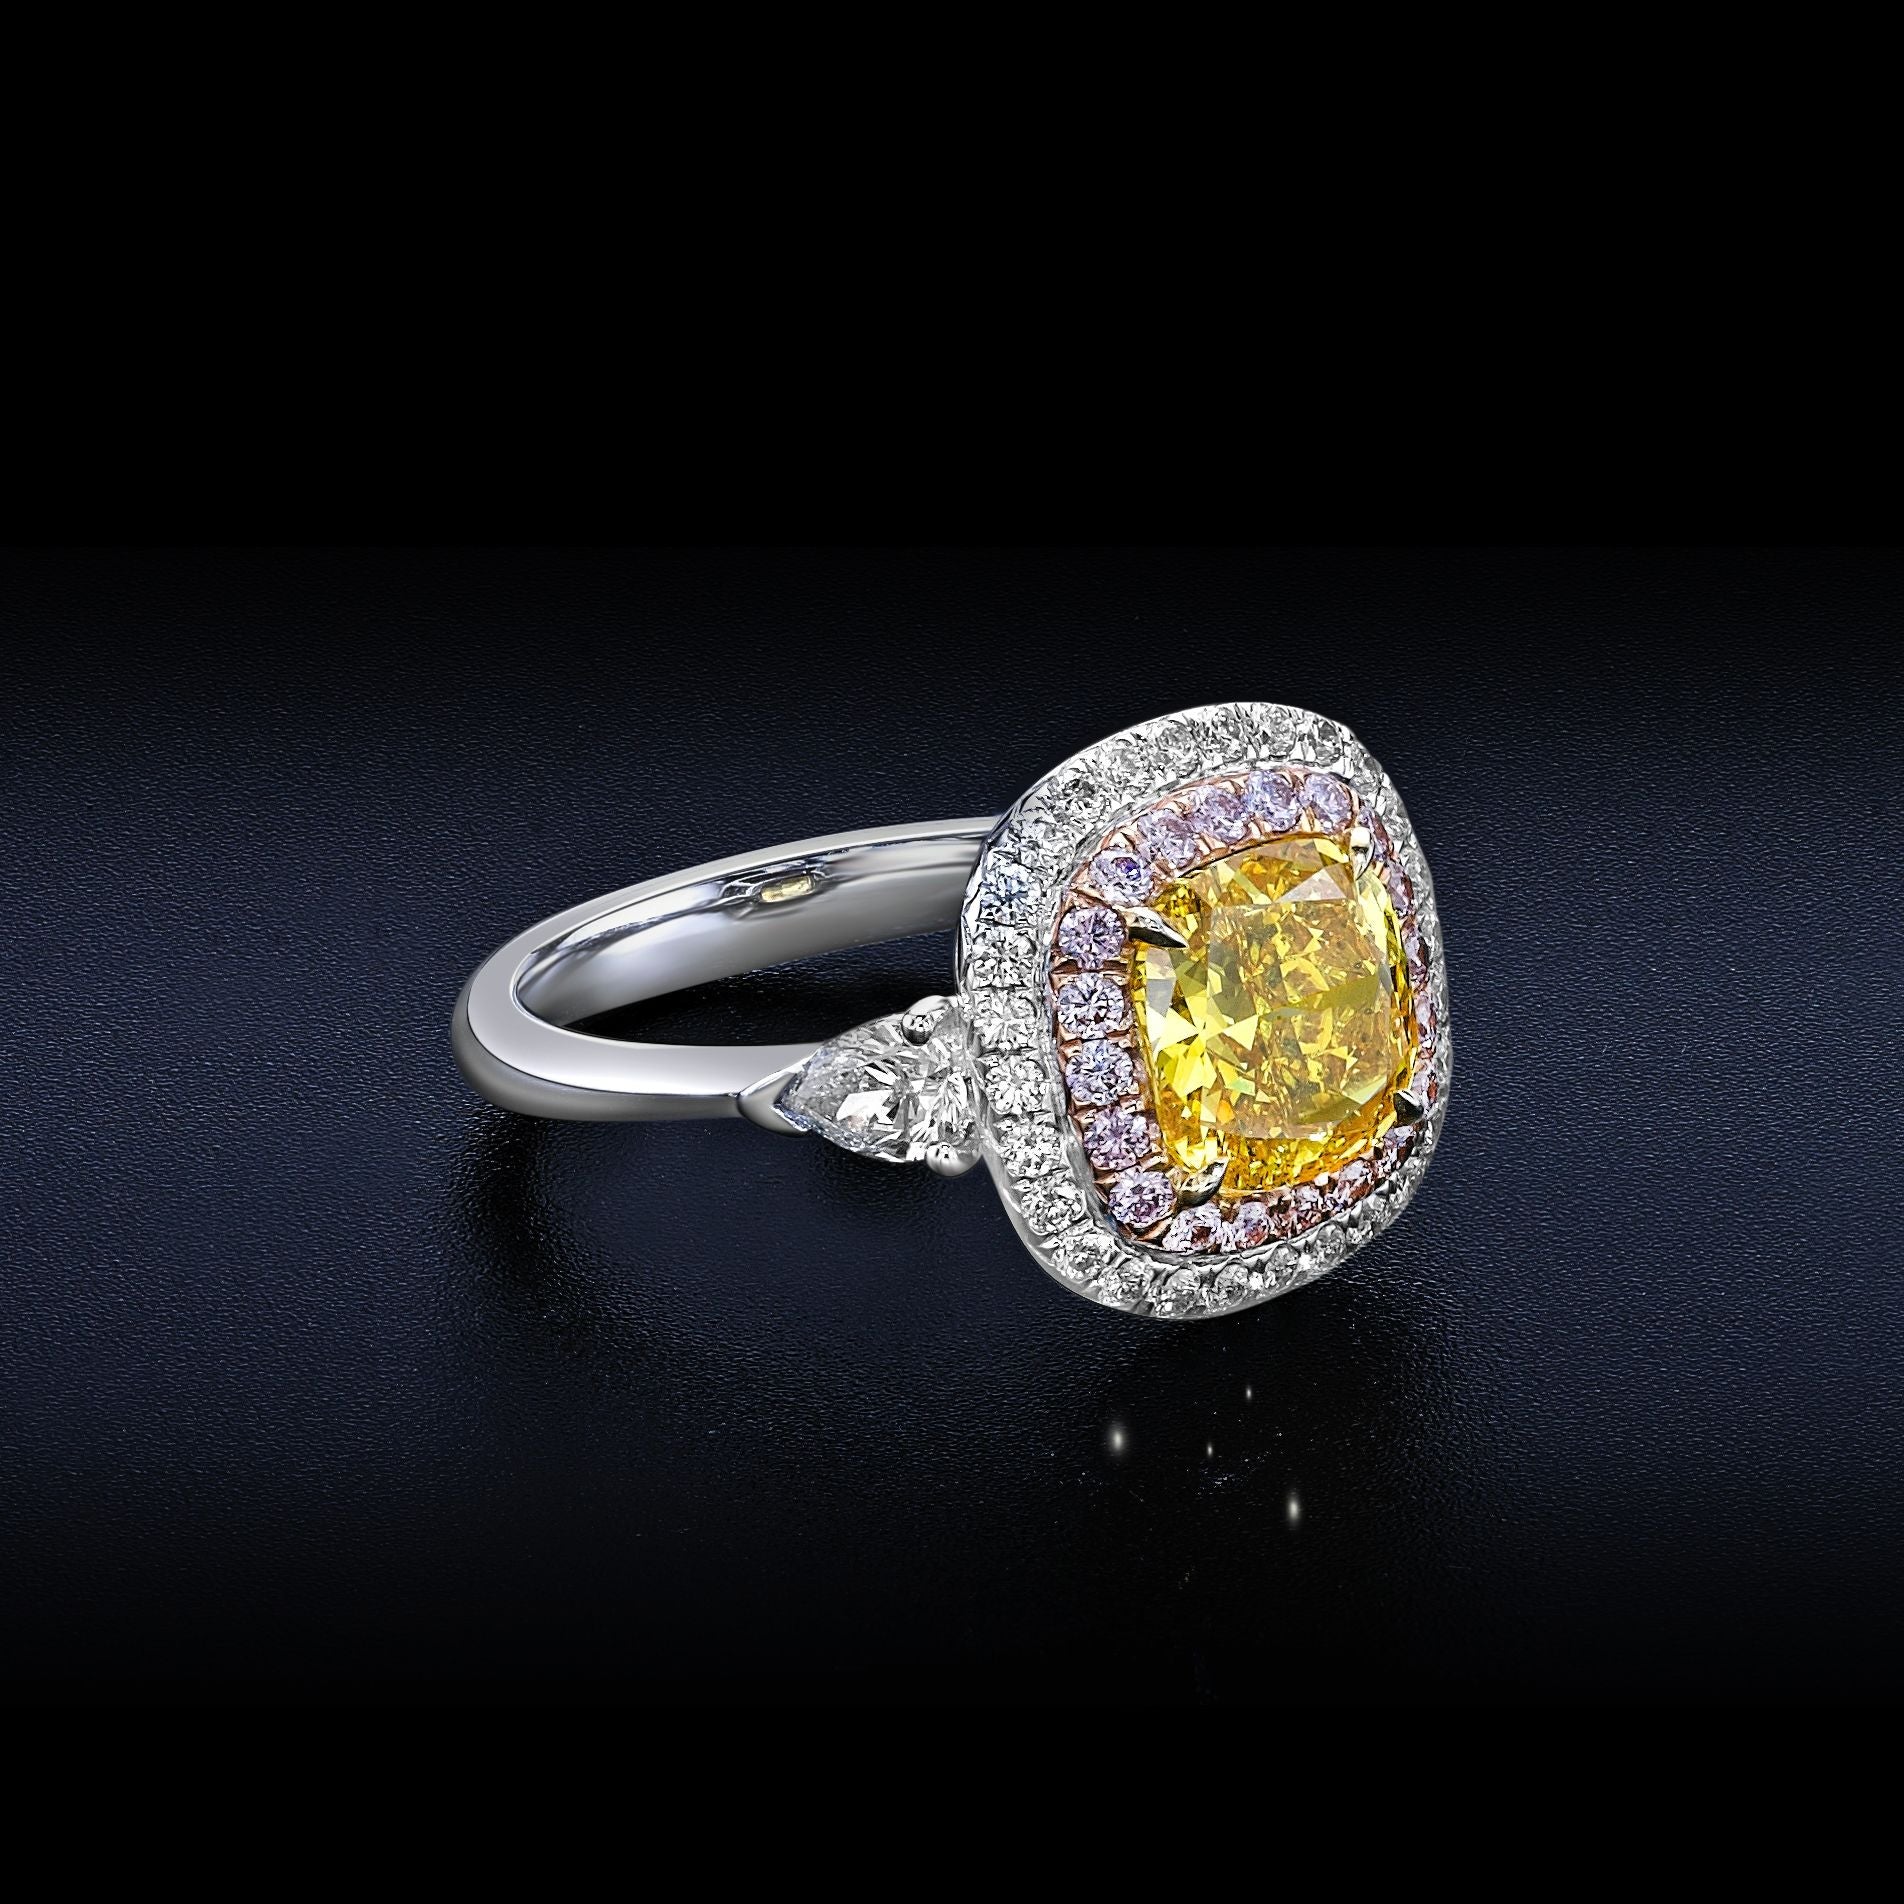 Vivid Yellow Diamond Halo Ring - 3.03ct TW